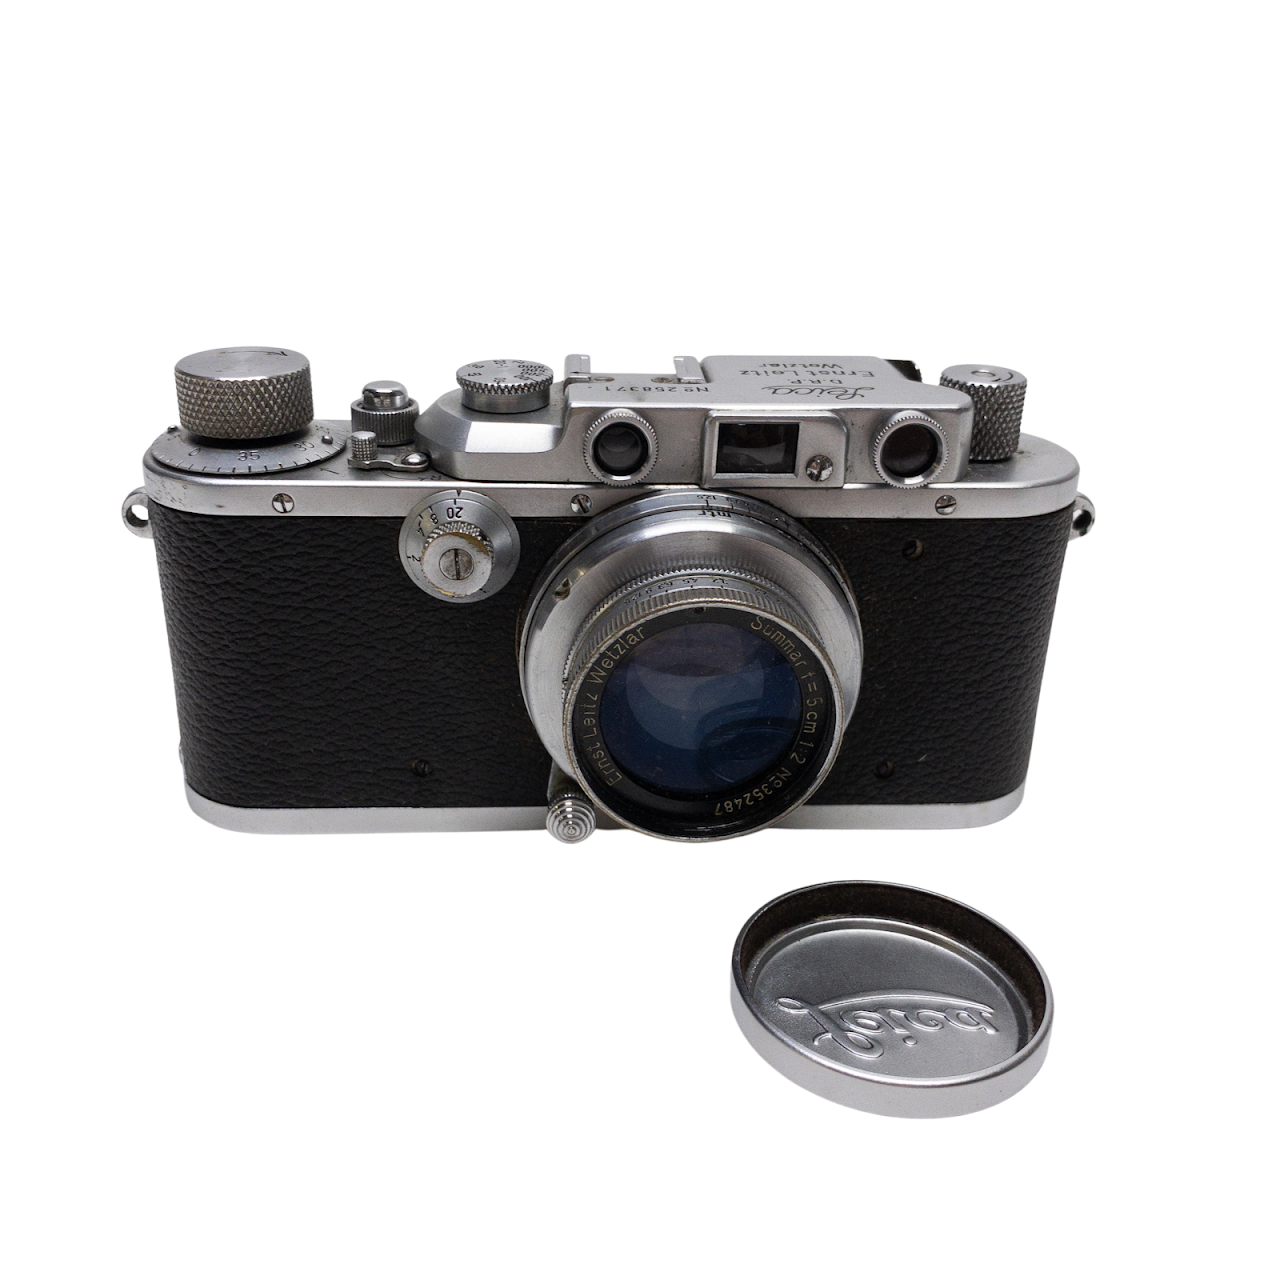 Leica DRP No. 258371 Camera with Leather Case, 5cm Summar Lense